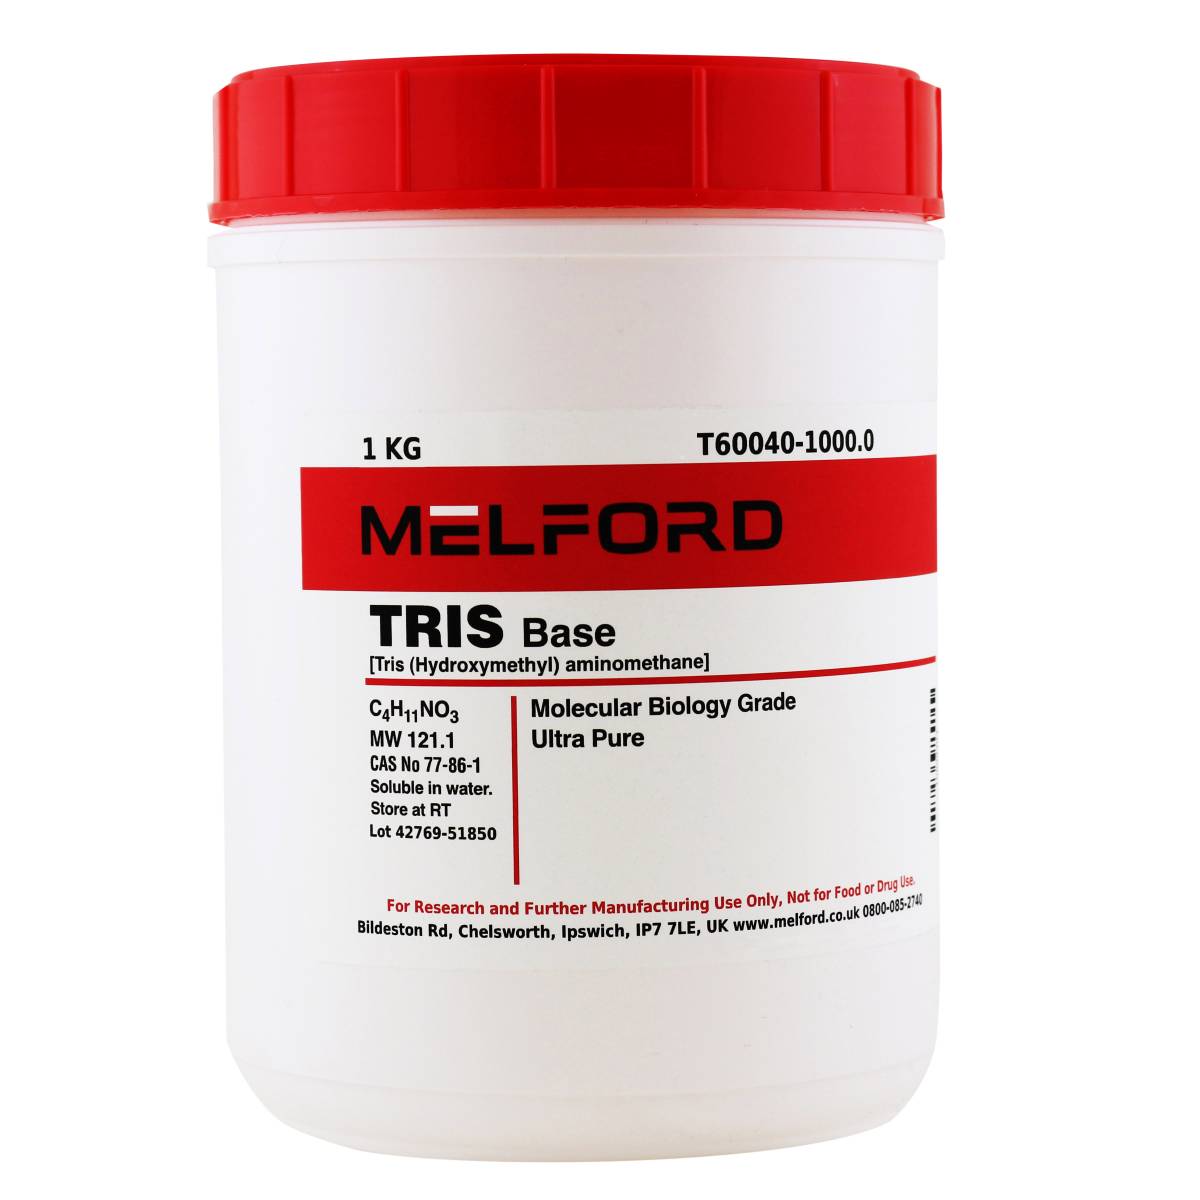 TRIS Base Ultrapure [Tris(hydroxymethyl) aminomethane], 1 Kilogram